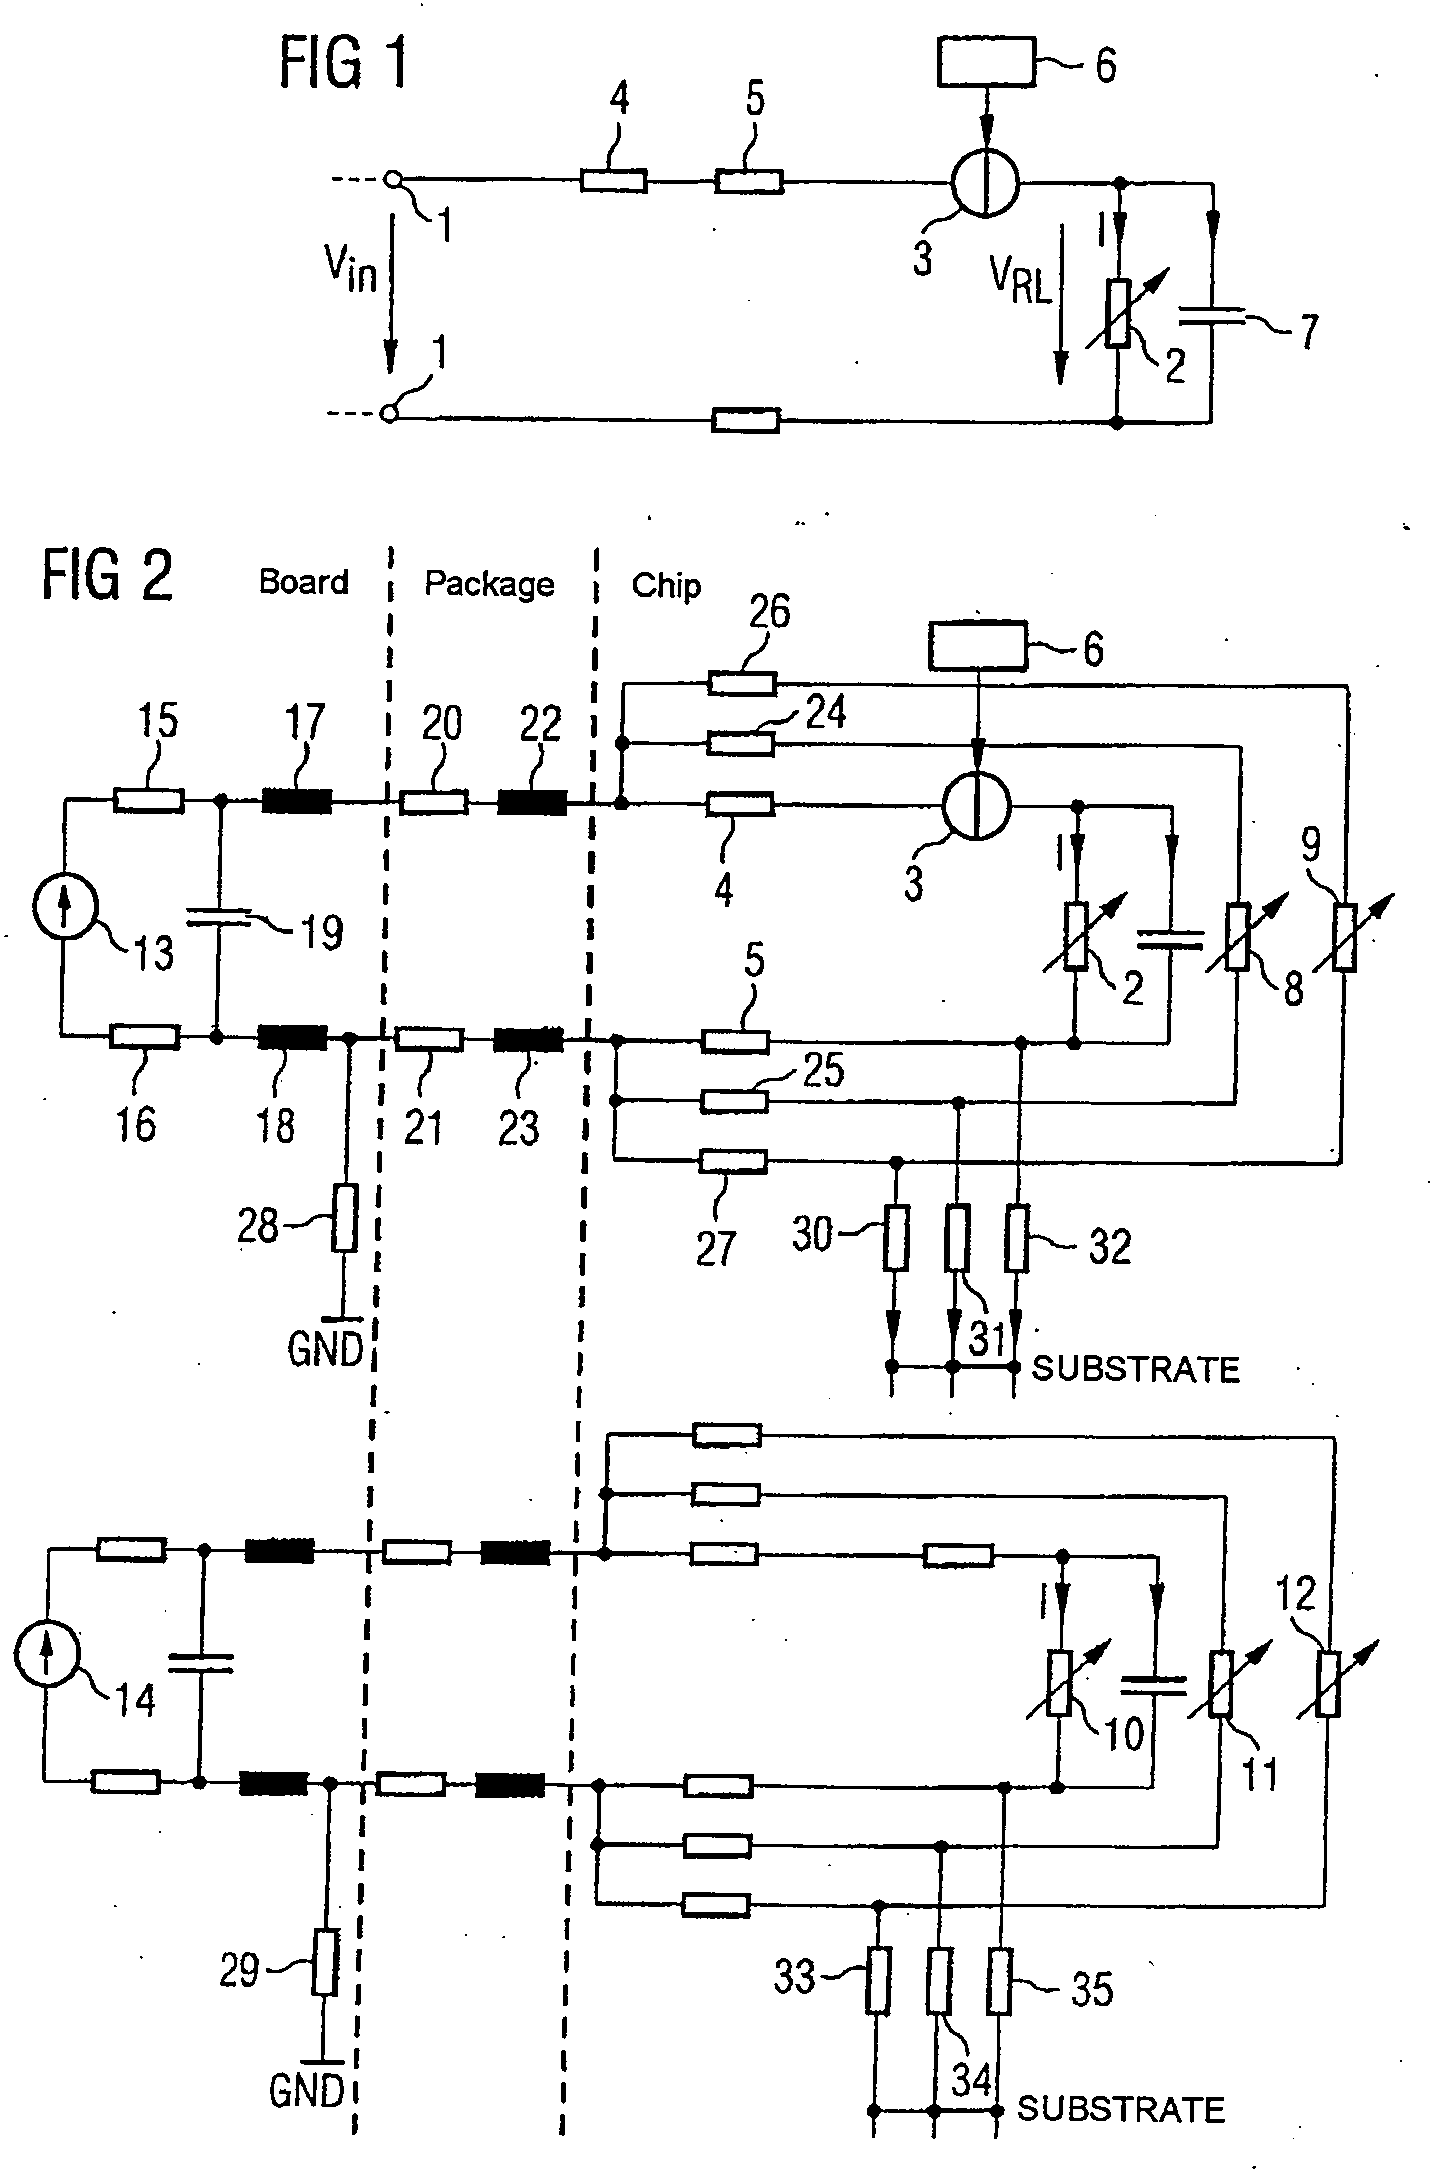 Circuit arrangement and method for reducing crosstalk